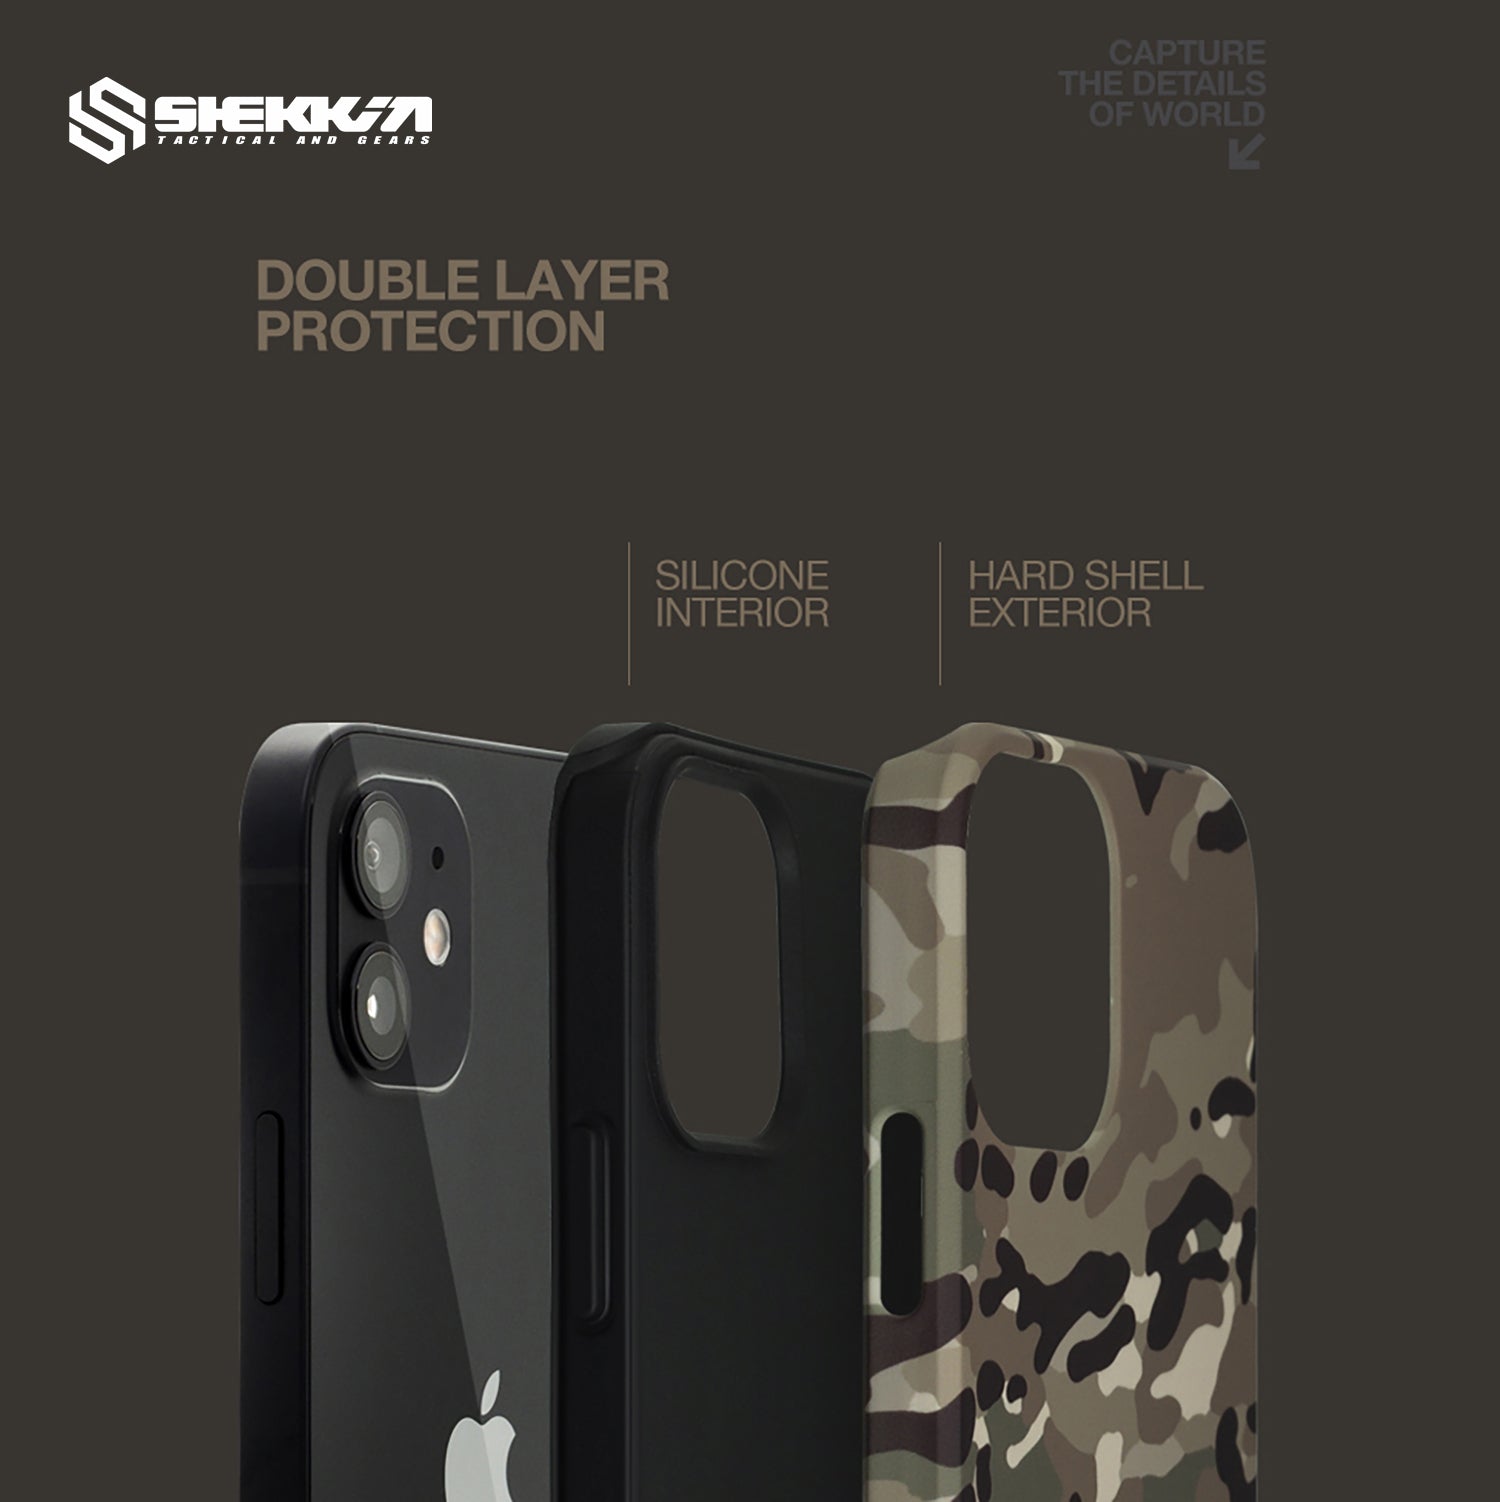 Shekkin Gears x 42nd street IPHONE ultra slim phone case - Shekkin Gears